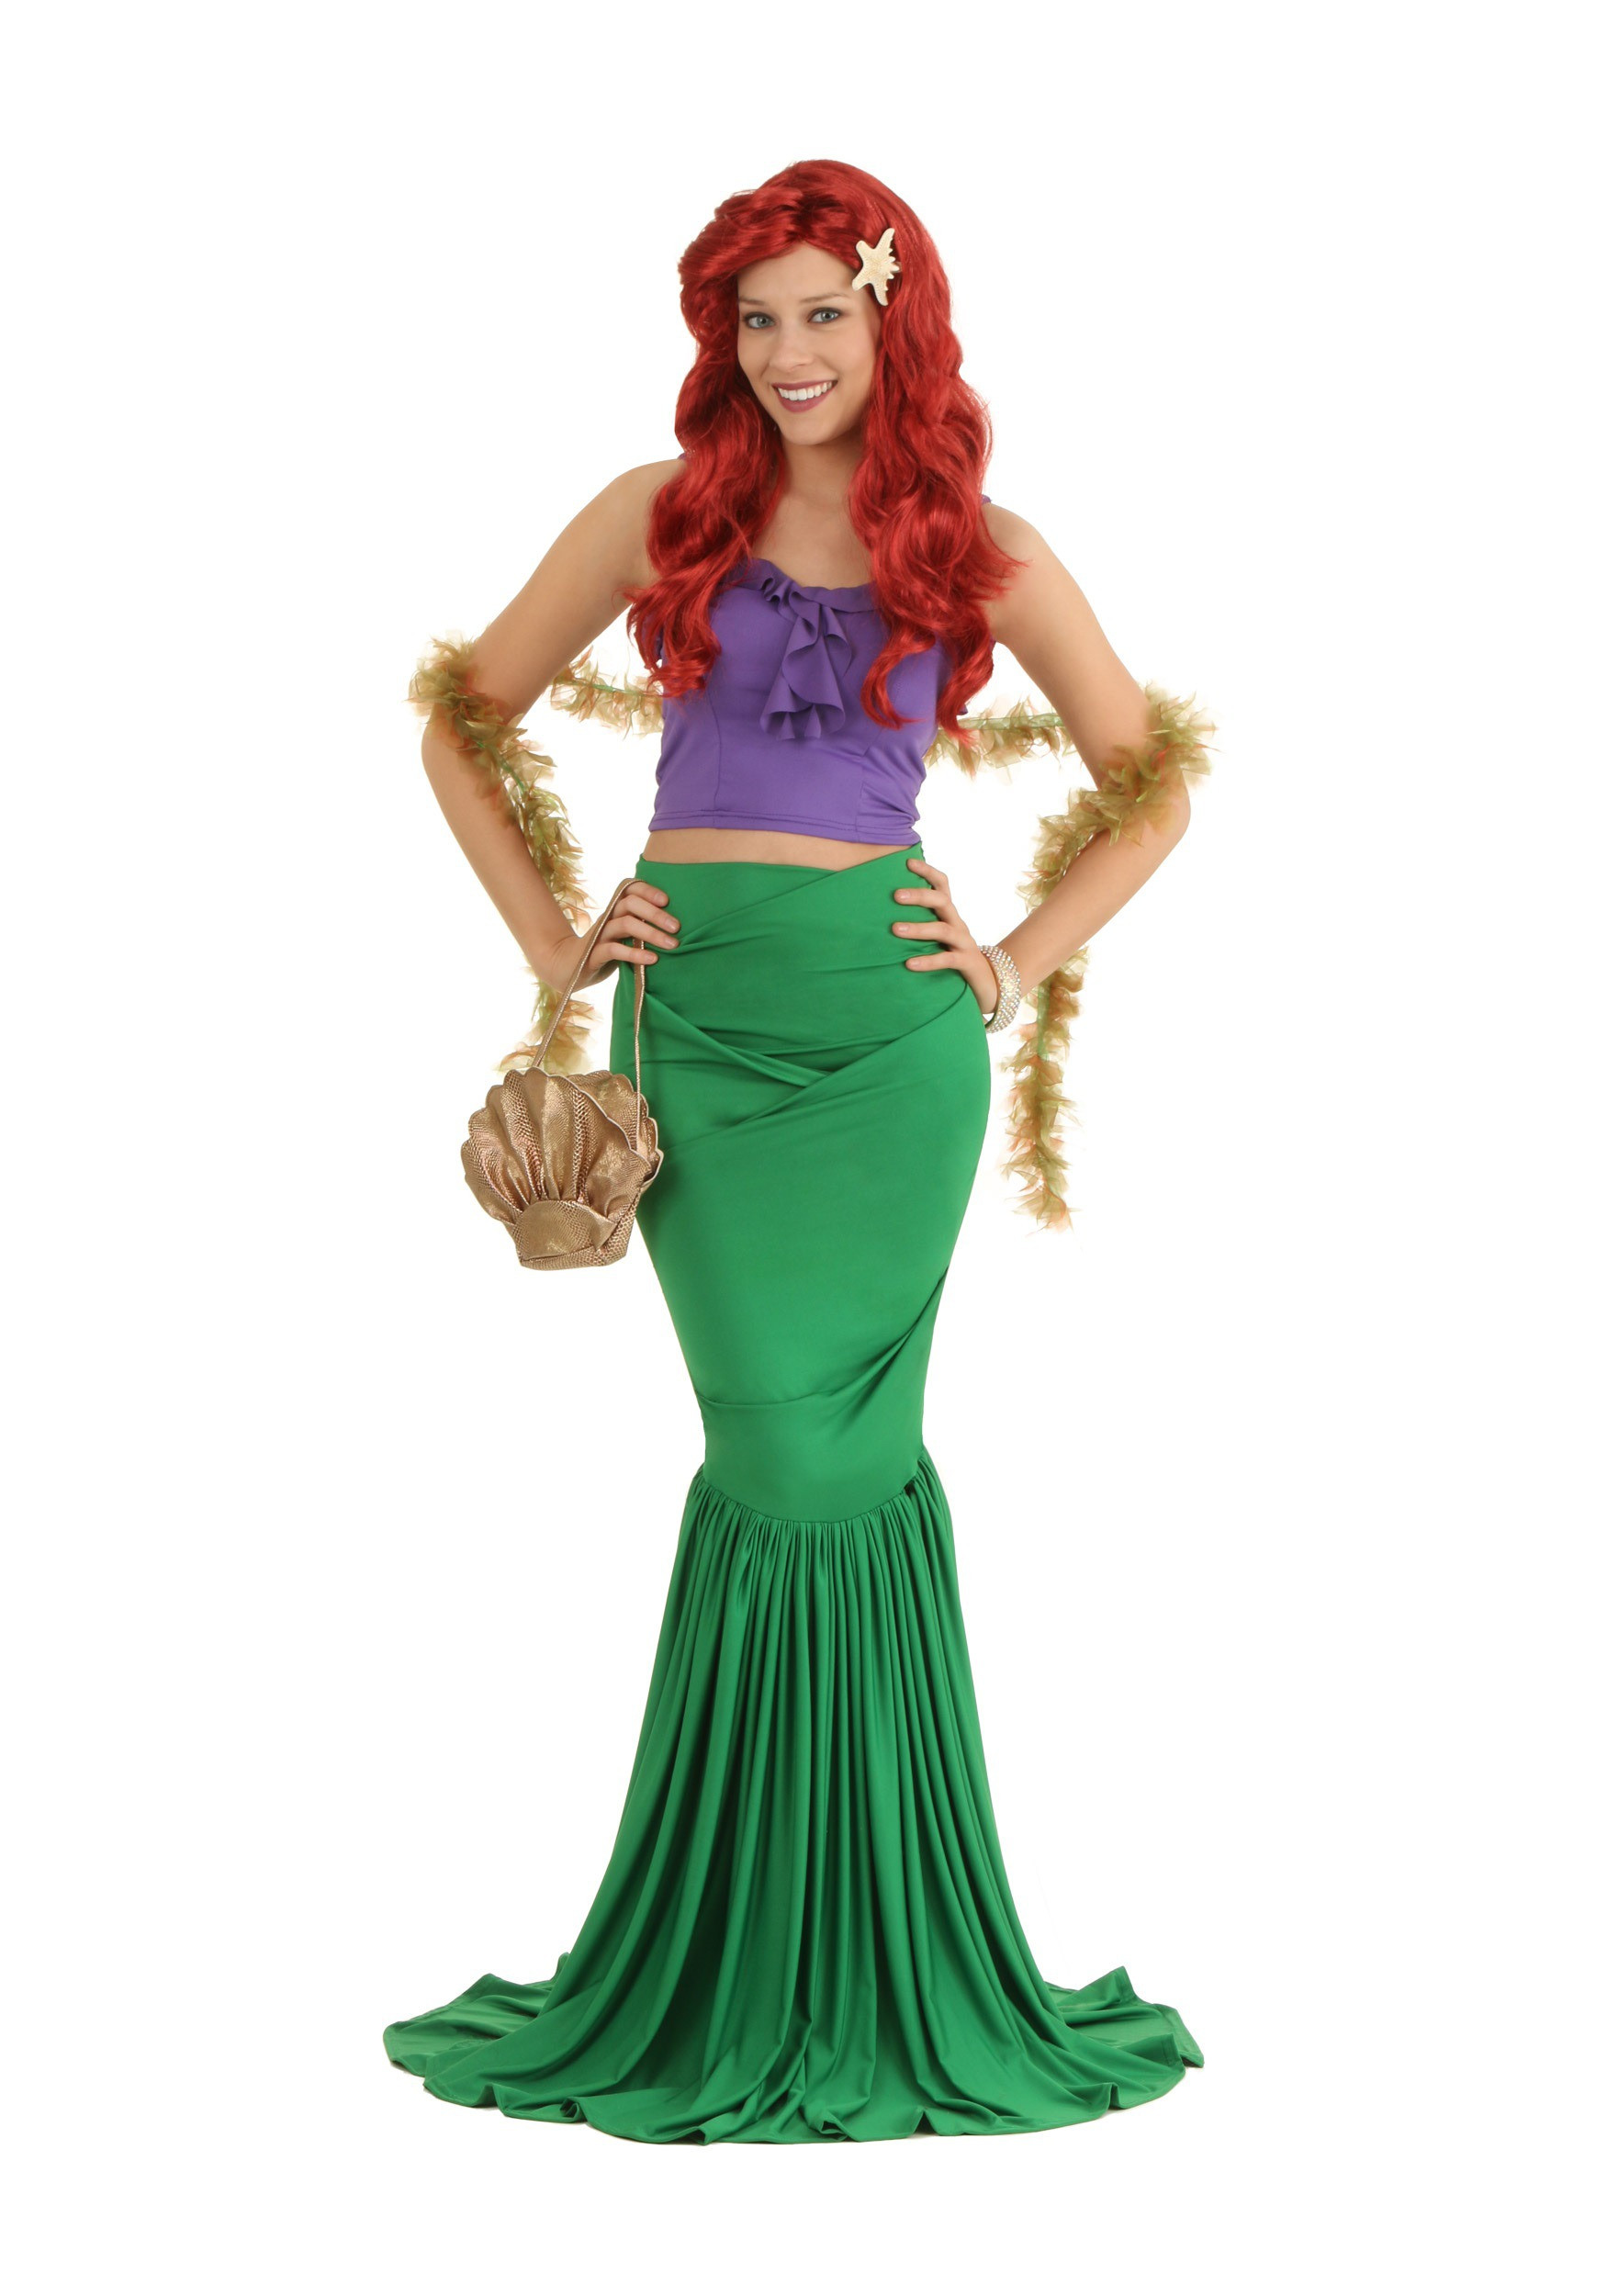 Mermaid Halloween Costume DIY
 Adult Mermaid Costume